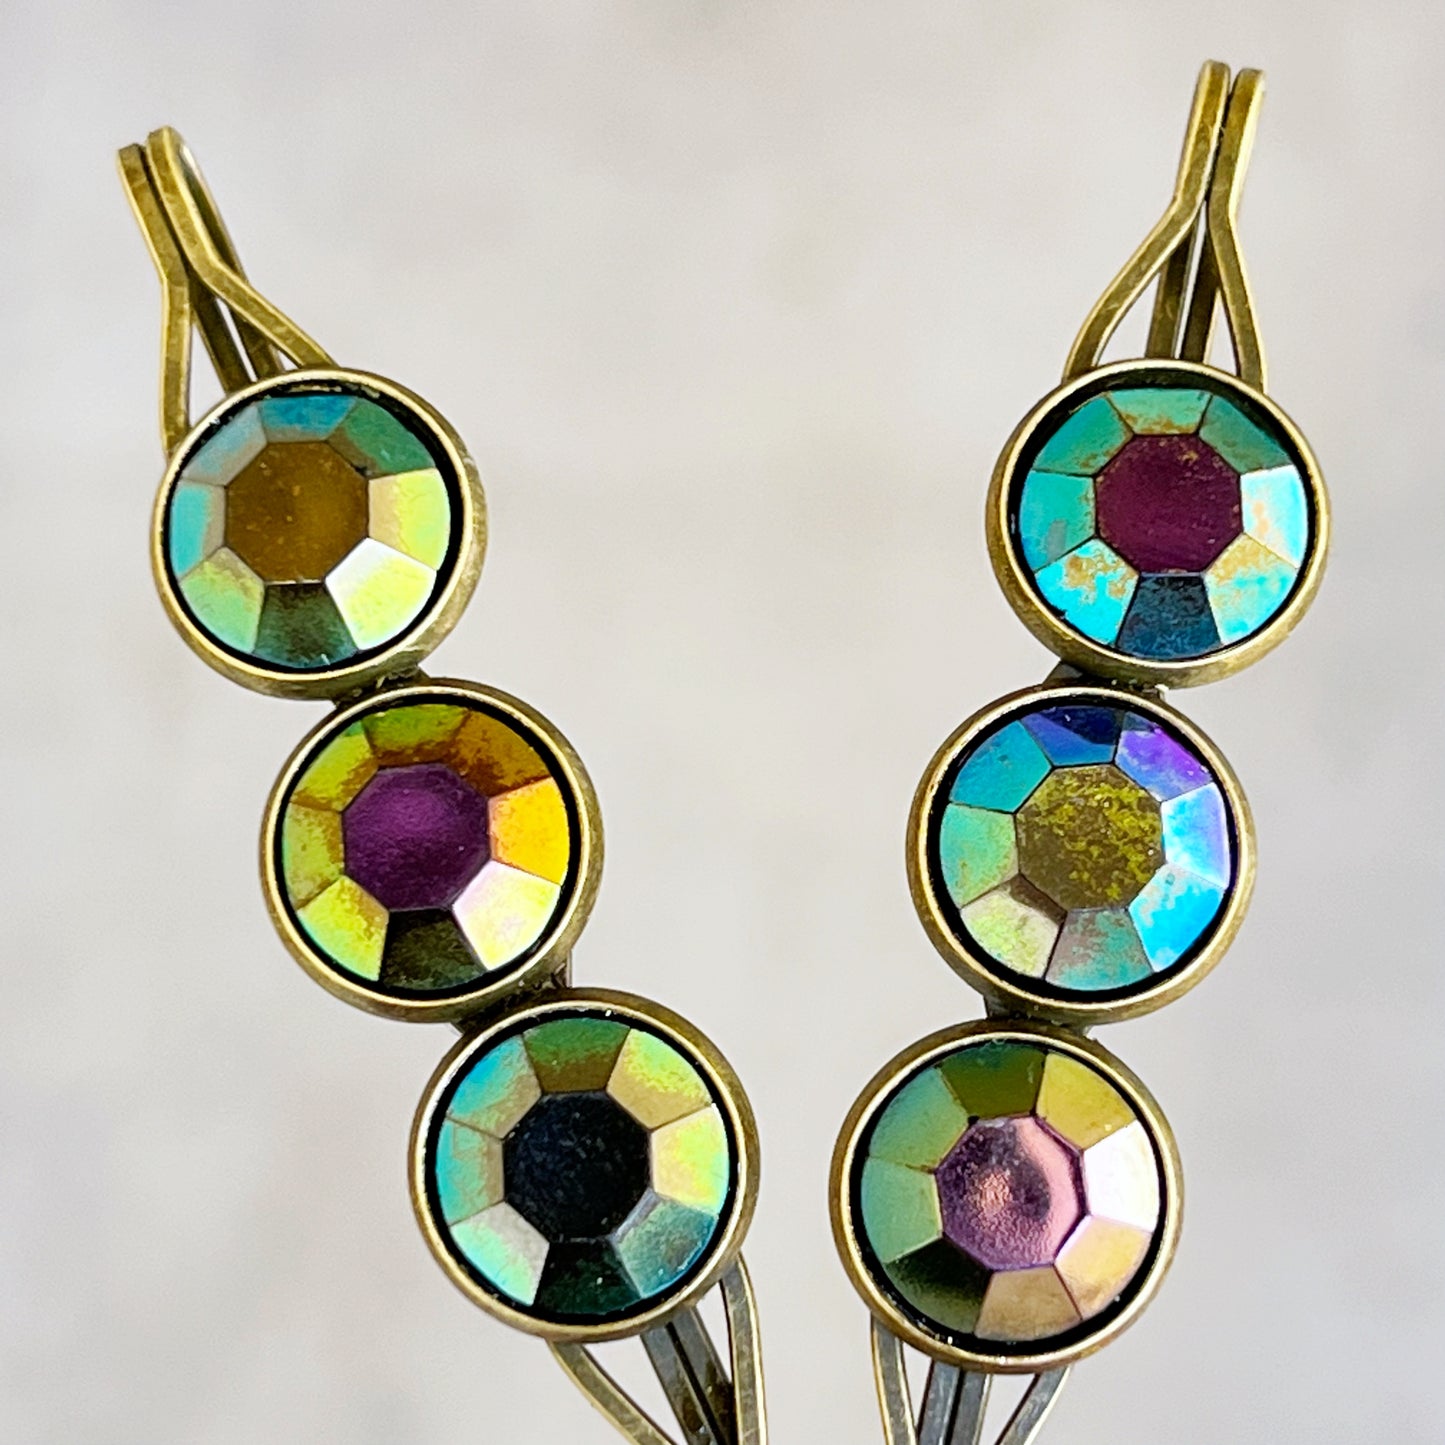 Metallic Rainbow Hair Clips - Shiny & Colorful Hair Accessories